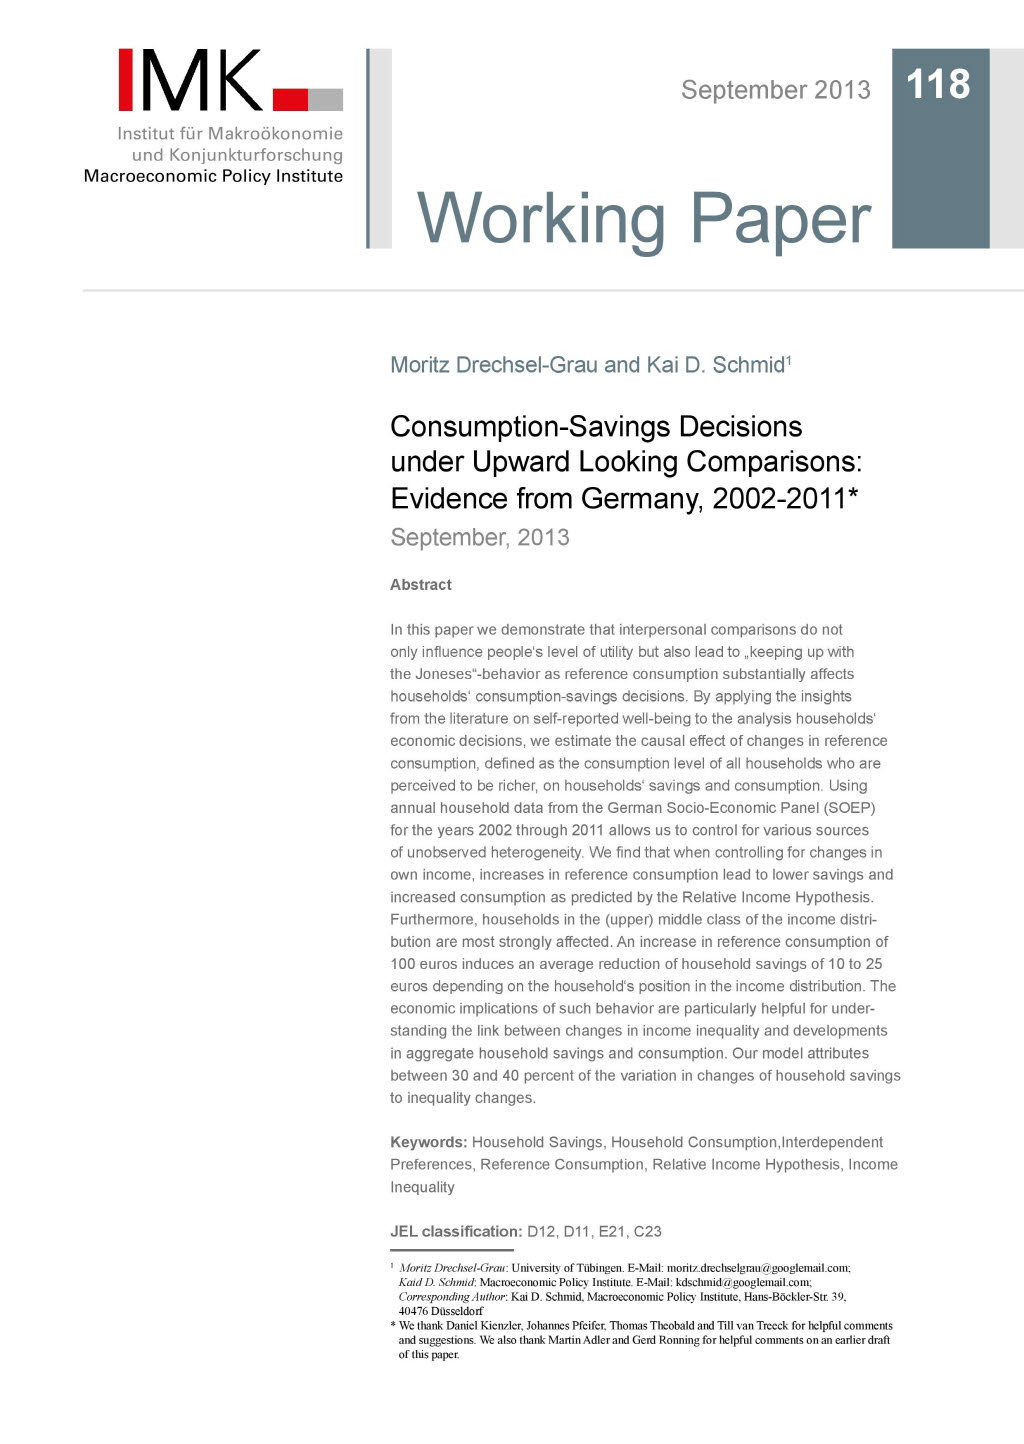 Consumption-Savings Decisions under Upward Looking Comparisons